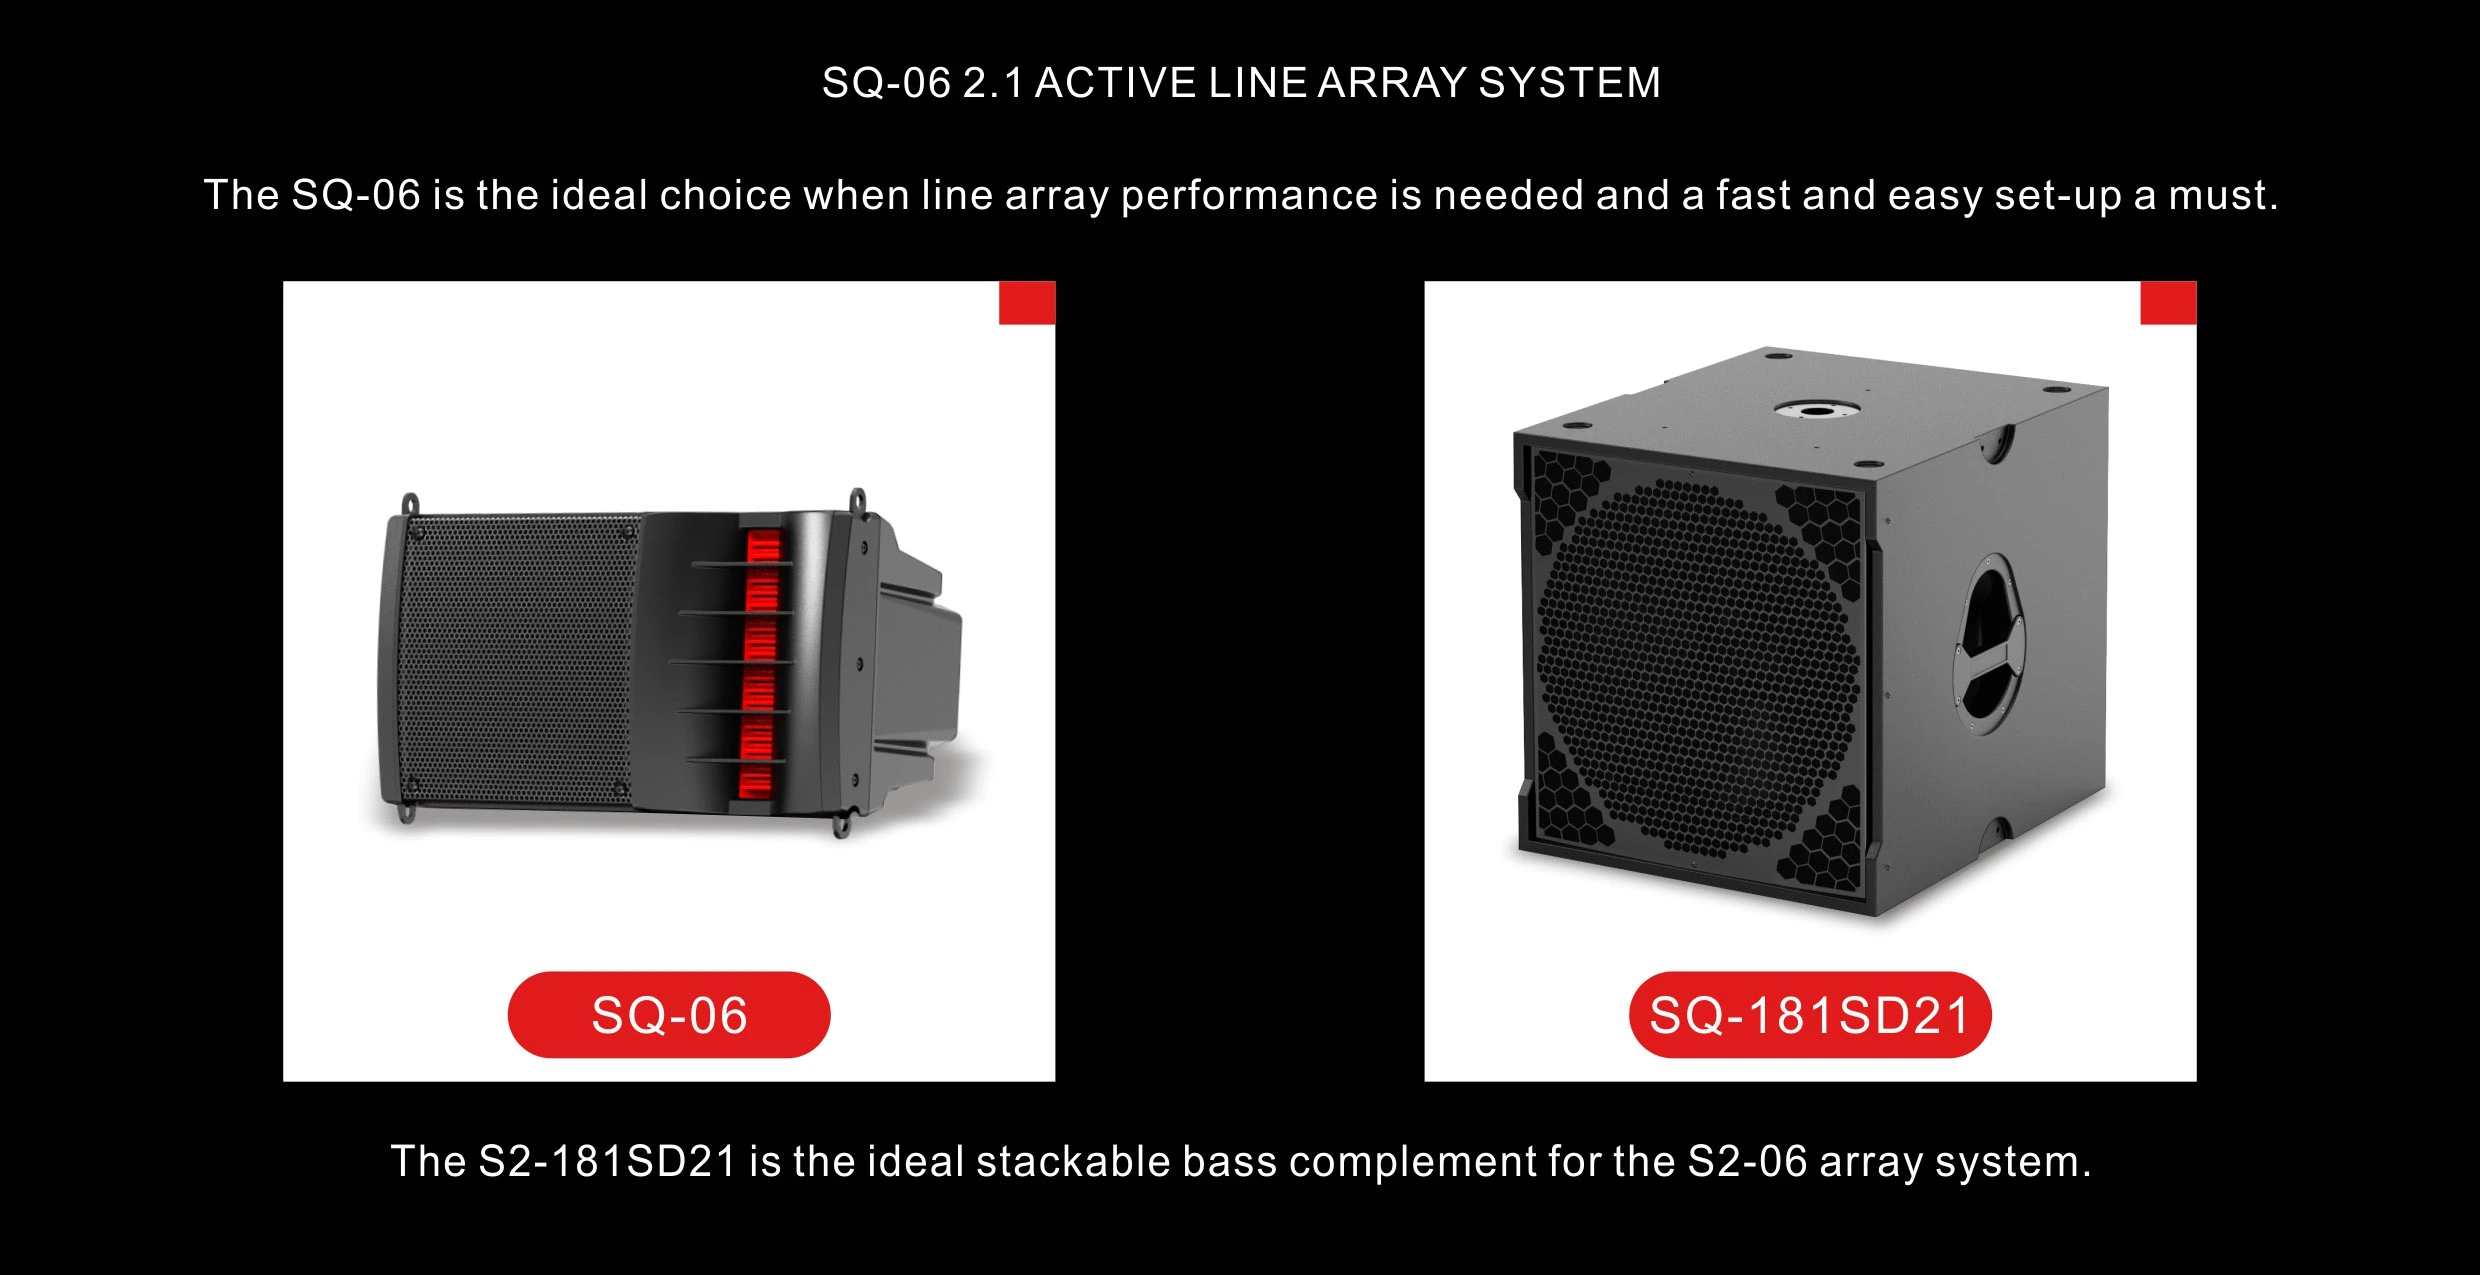 SQ 2.1 Series Professional Line Array Speaker, Active Line Array System, active line array system, line array active system, active line array China, active line array loudspeaker